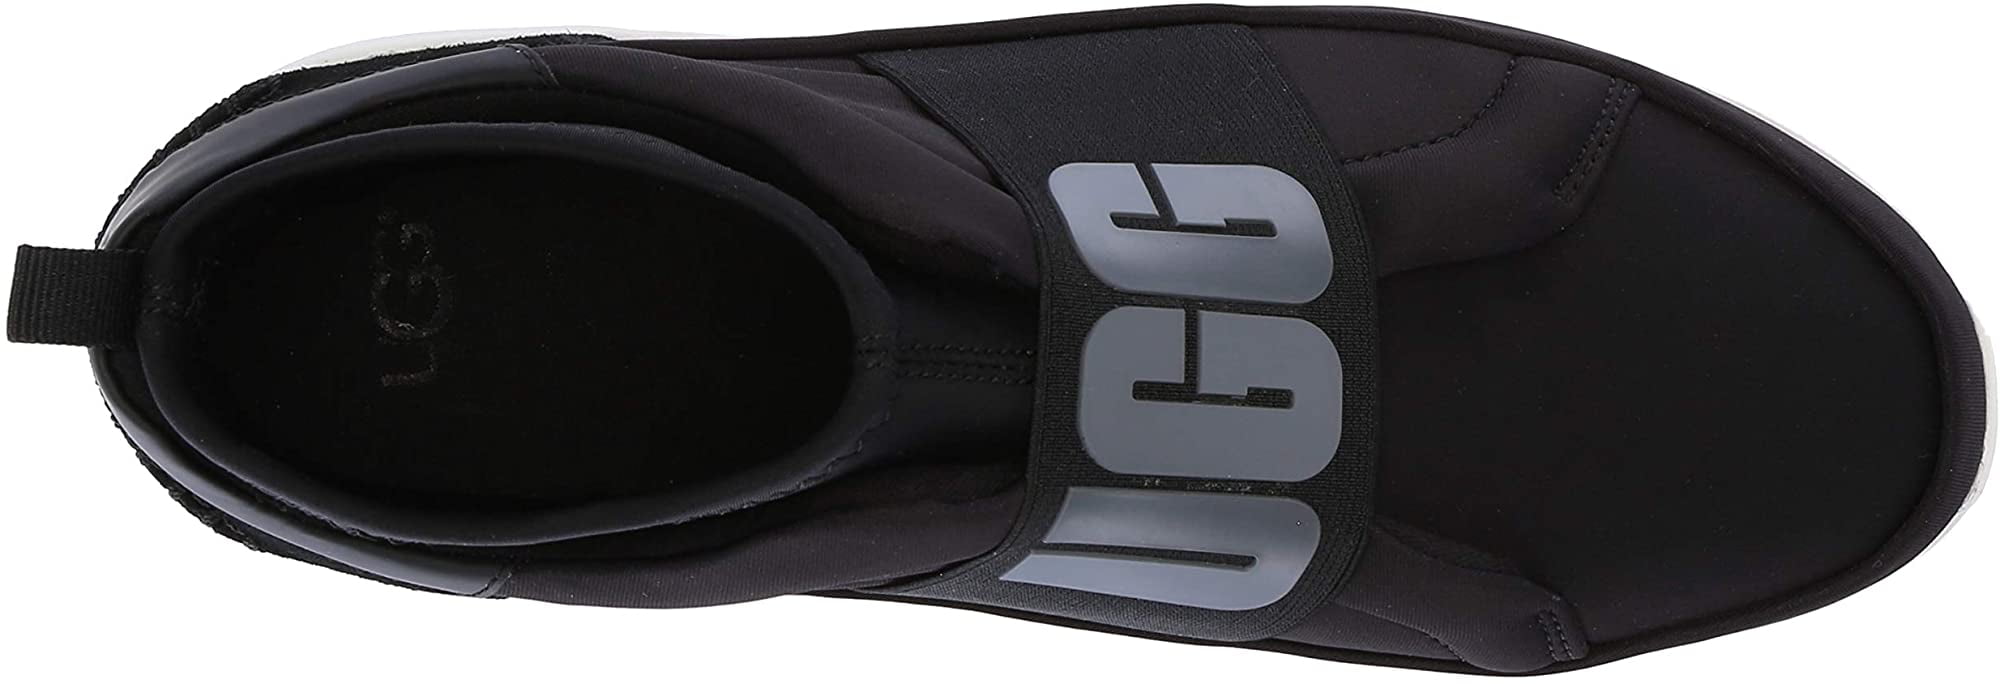 UGG Neutra Sock Sneaker Leather Grey & Silver | Leather, Leather sneakers,  Uggs